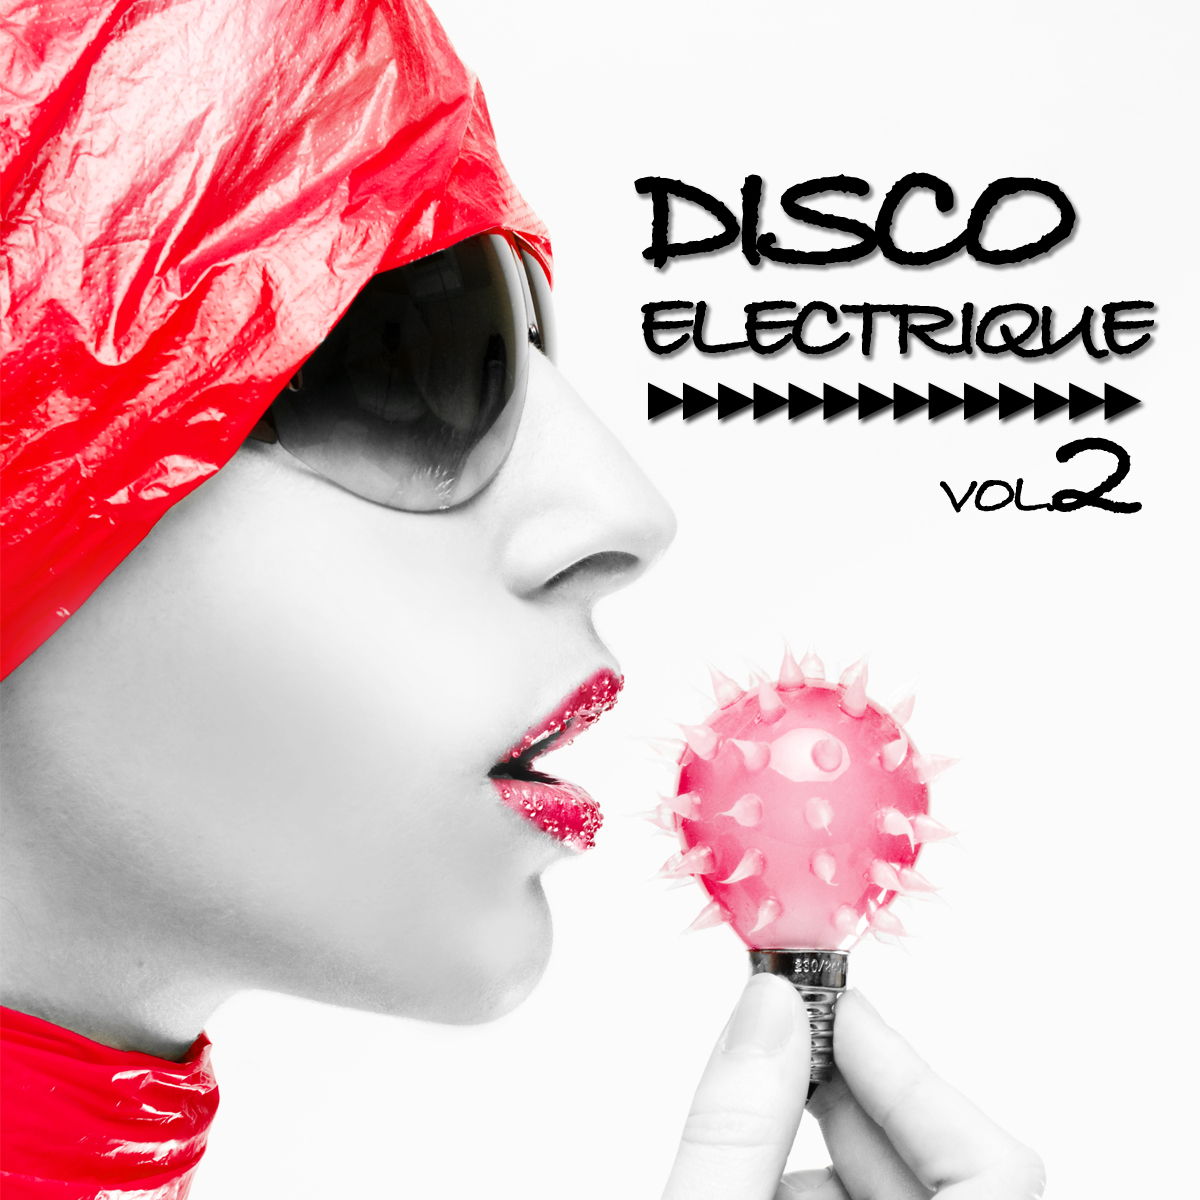 Disco Electrique, Vol. 2